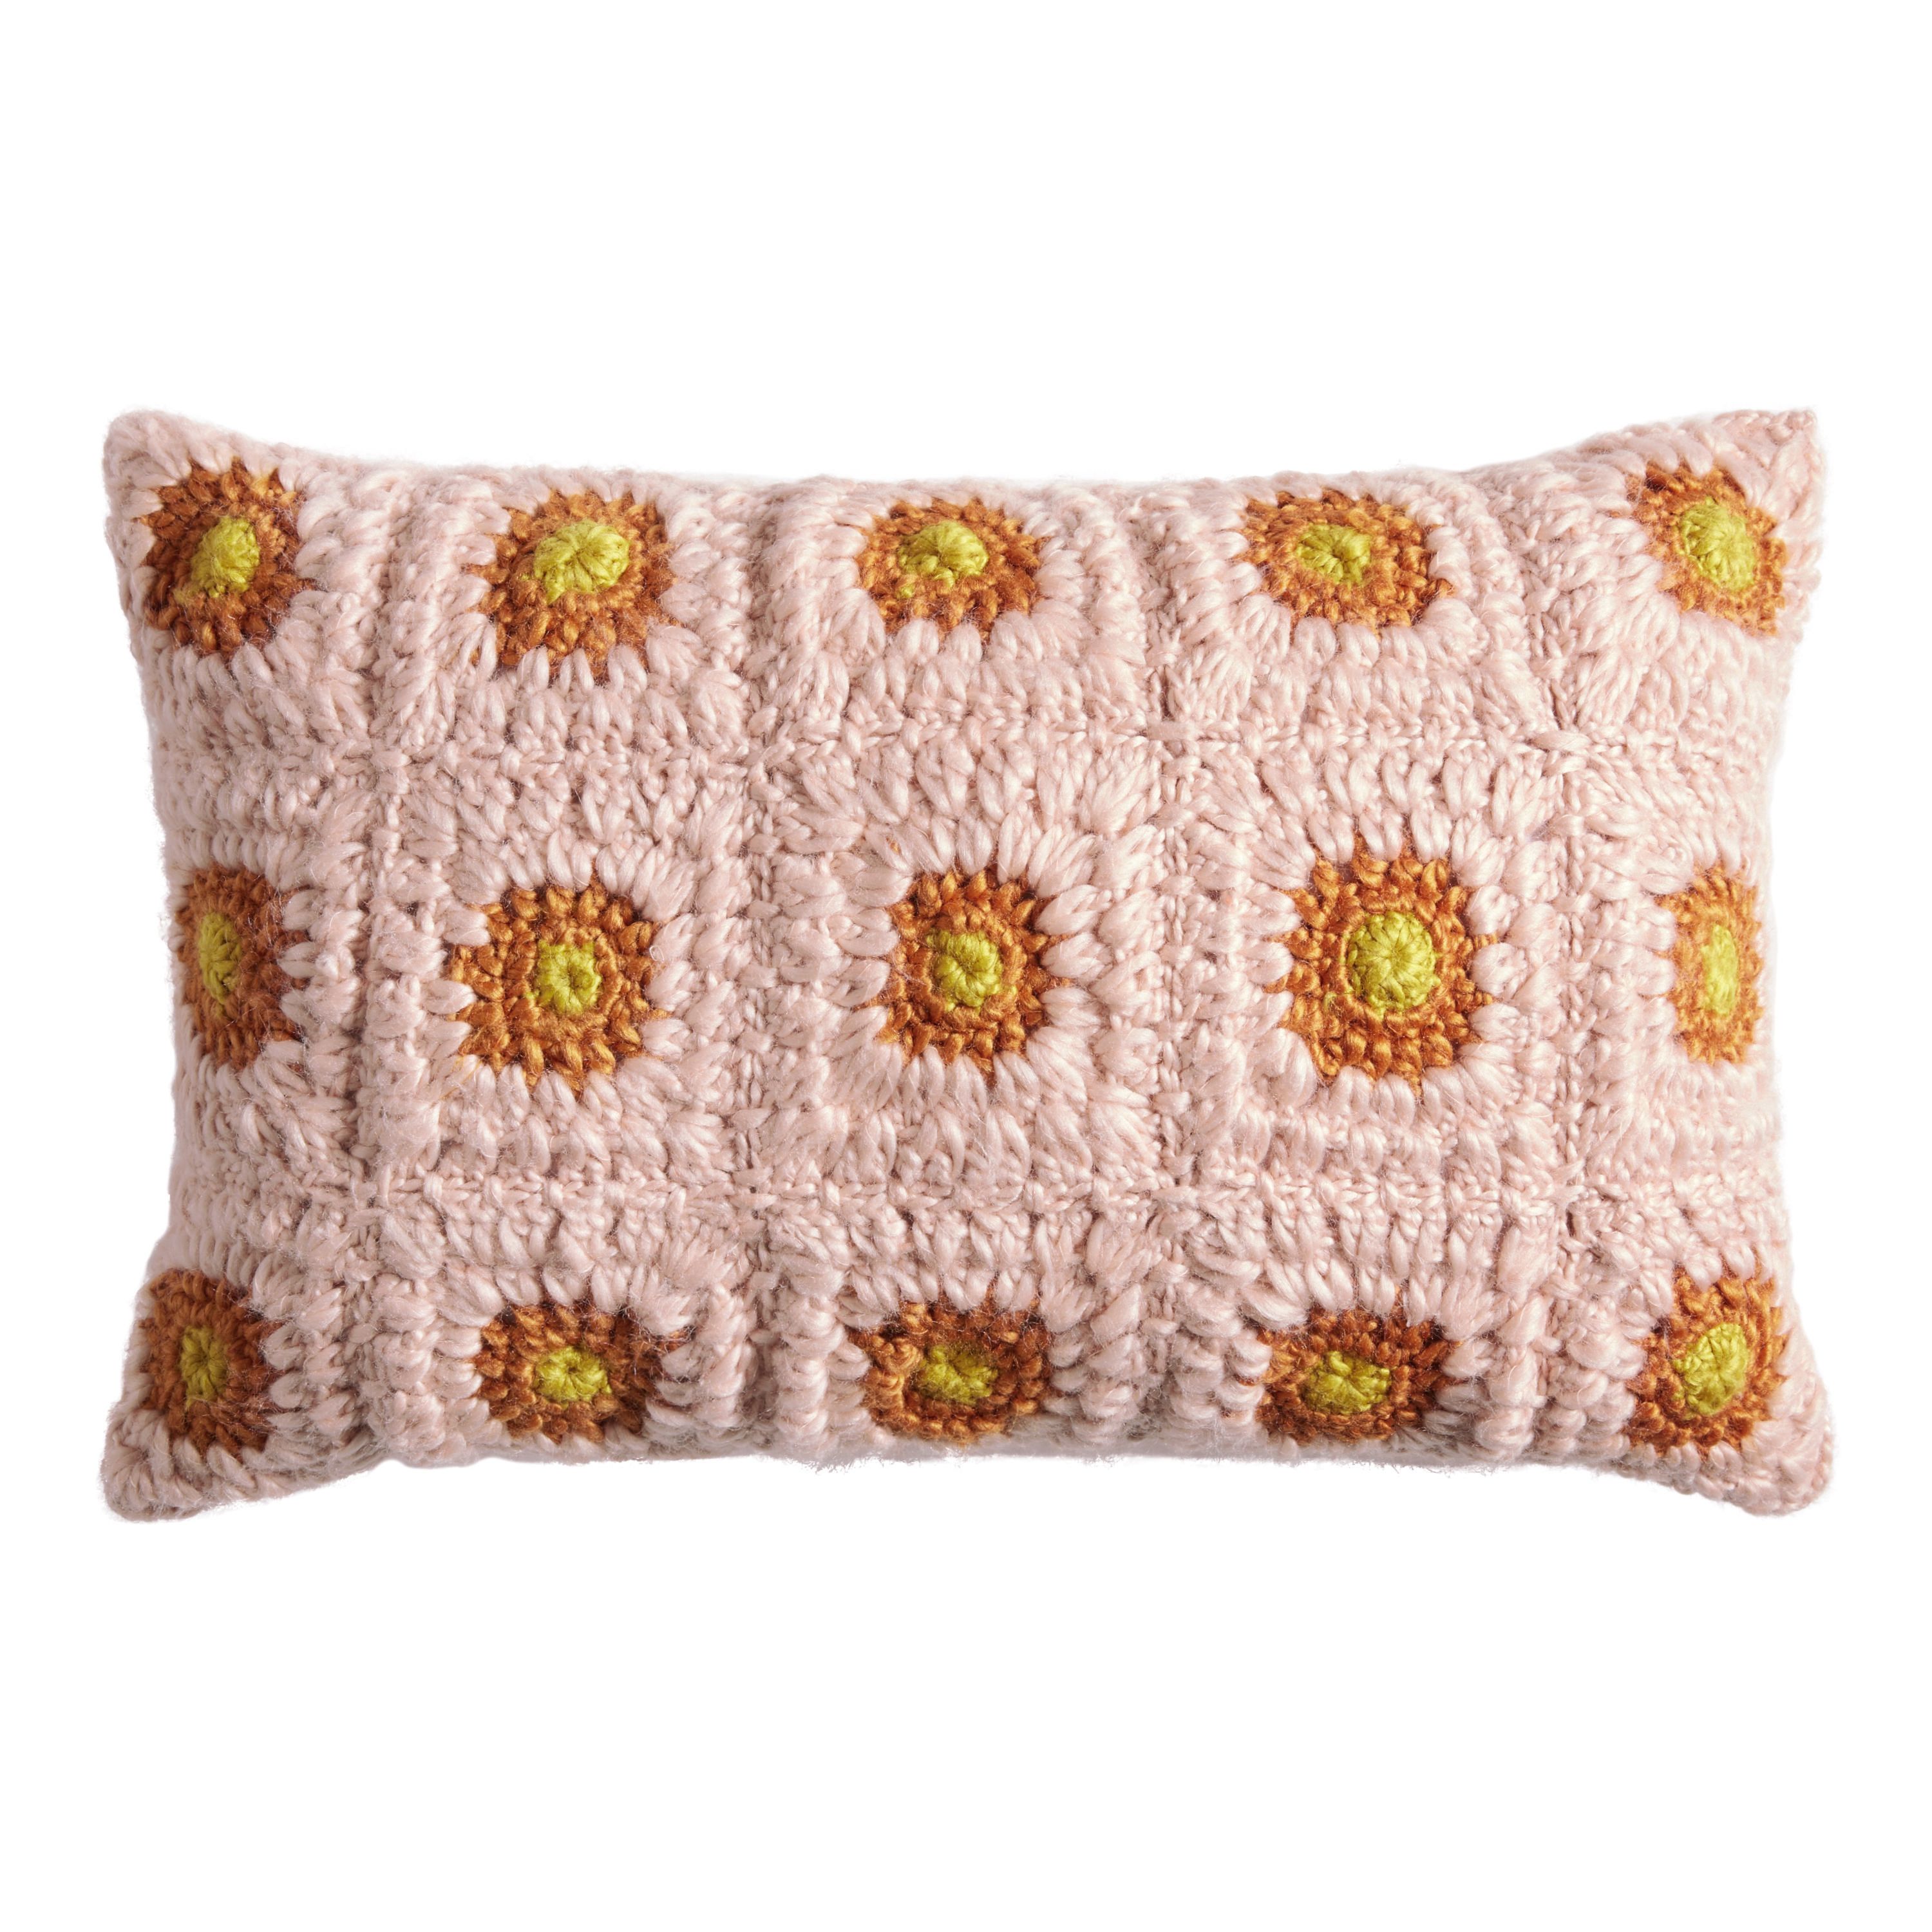 Ivory Tiled Square Crocheted Lumbar Pillow | World Market